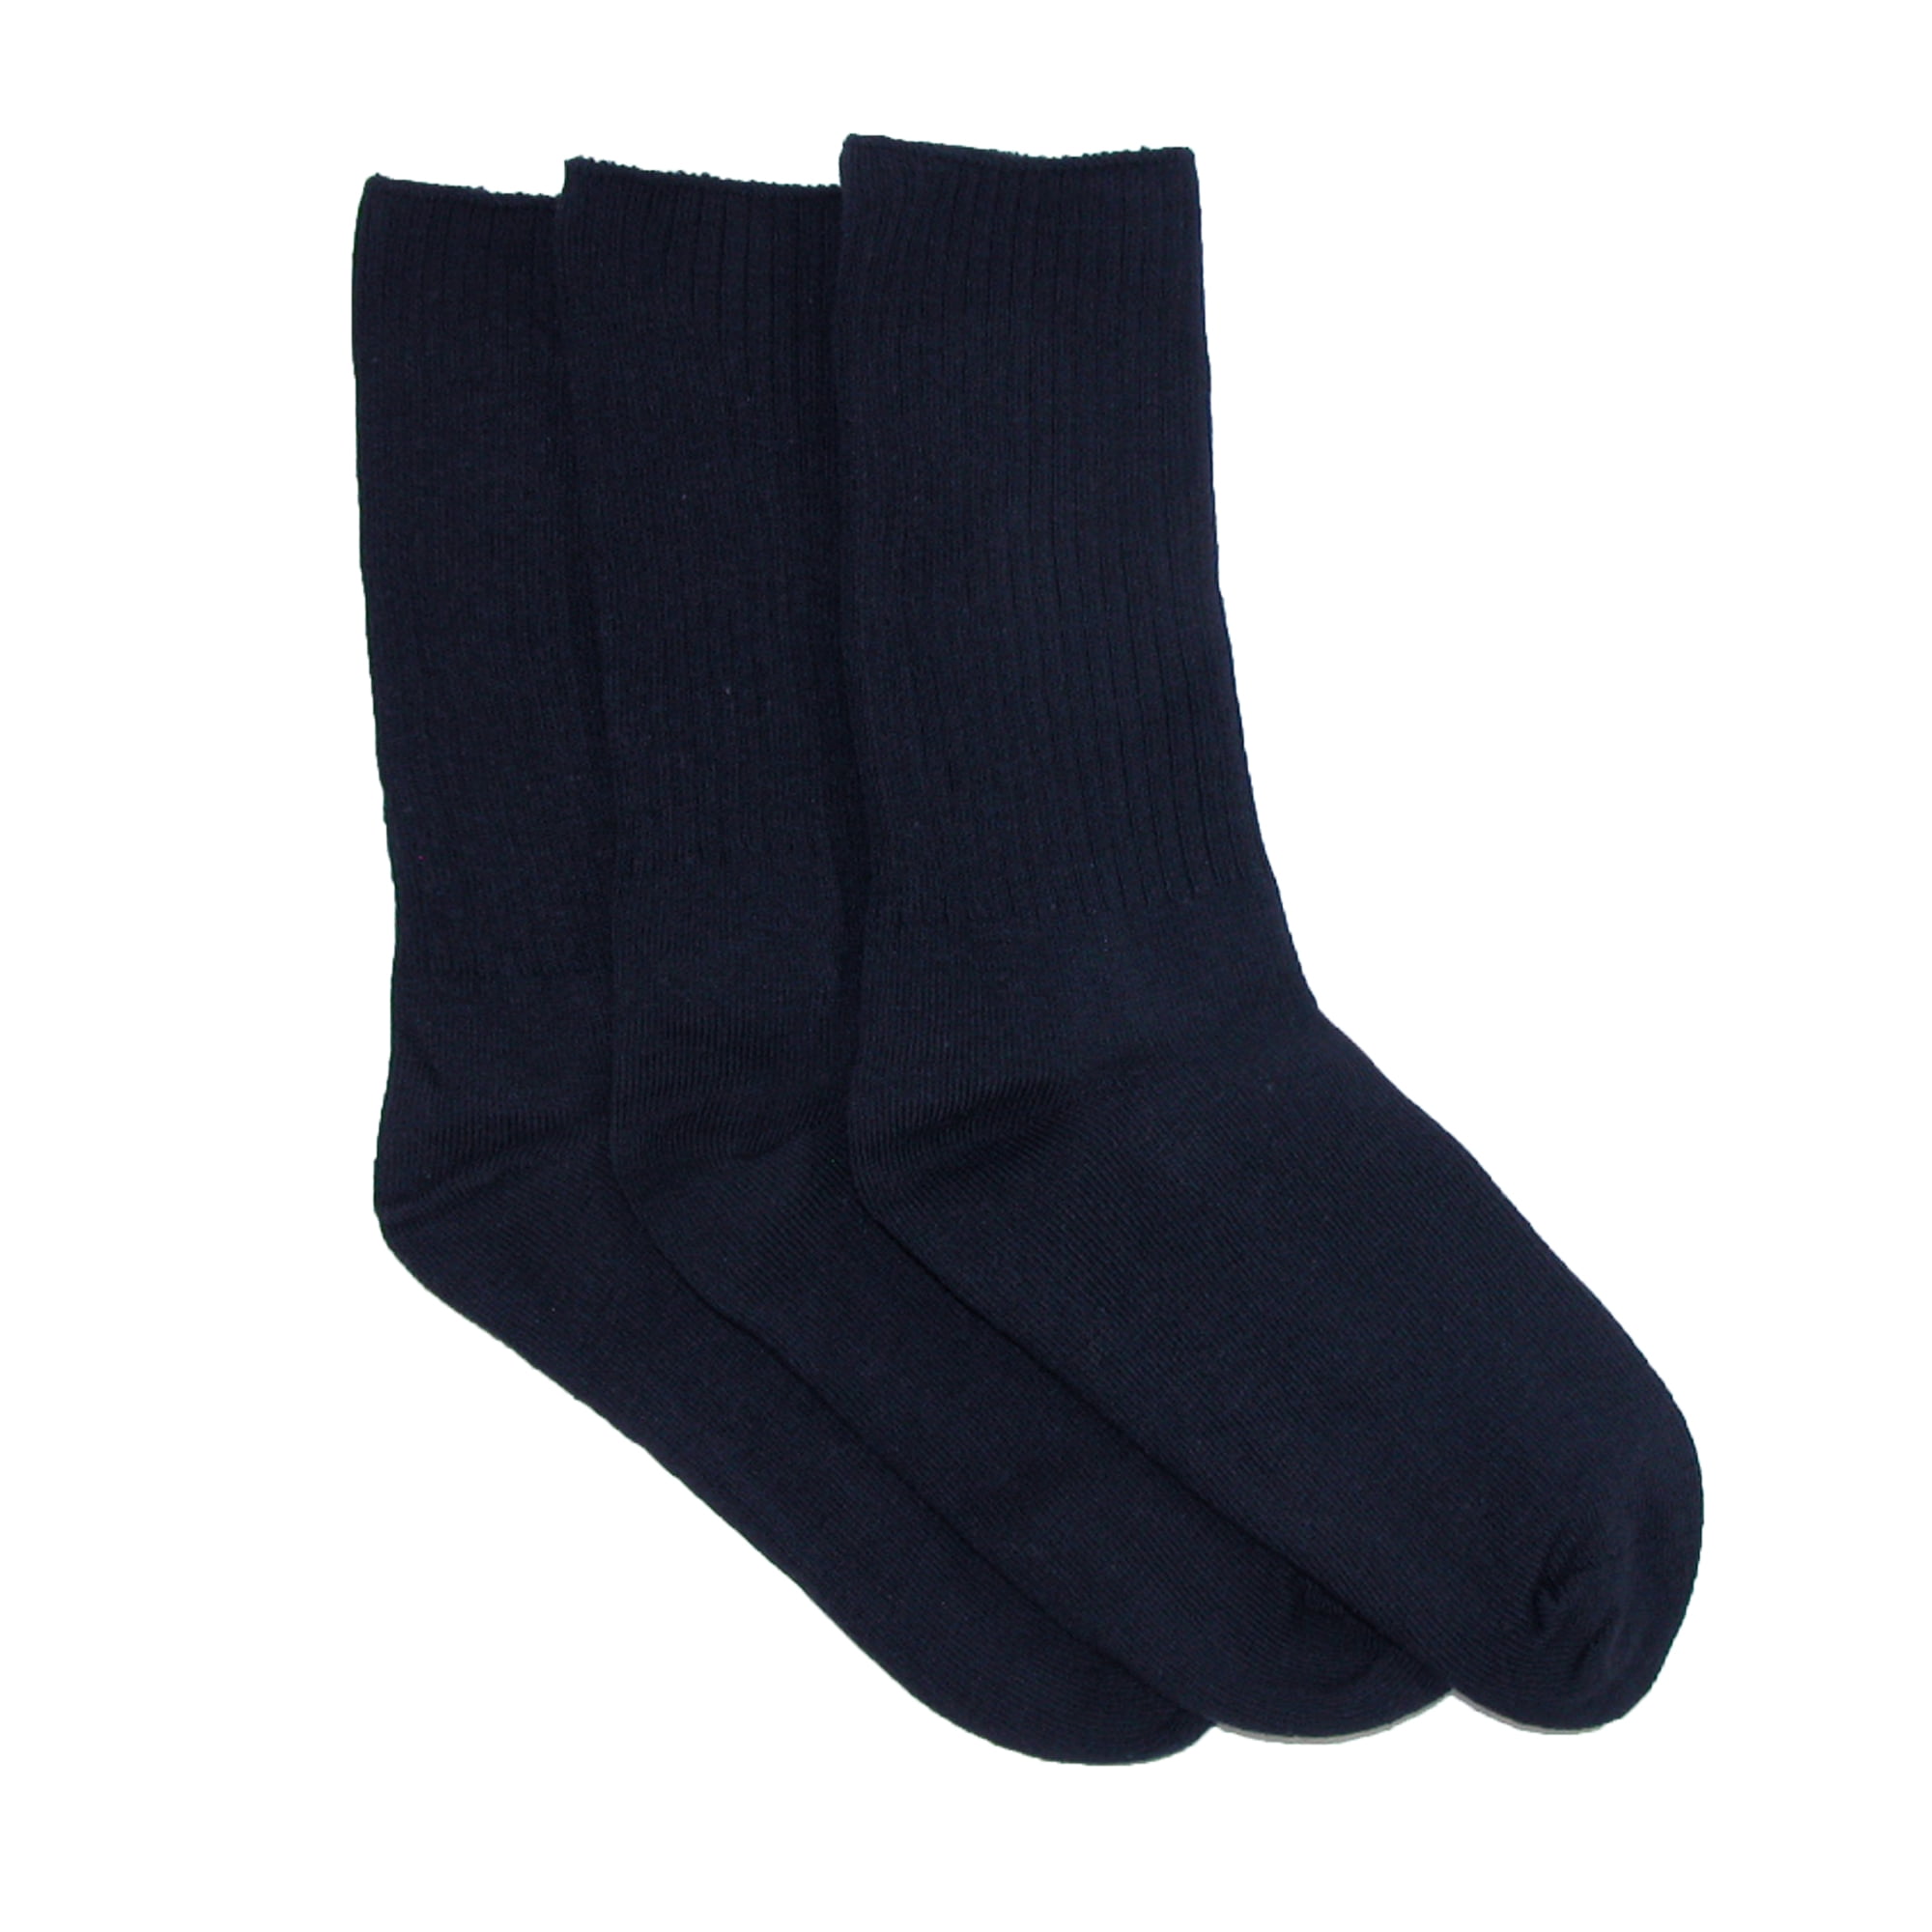 Jefferies Socks Mens Quarter Ankle Sports Cotton Seamless Low Cut Socks 3 Pair